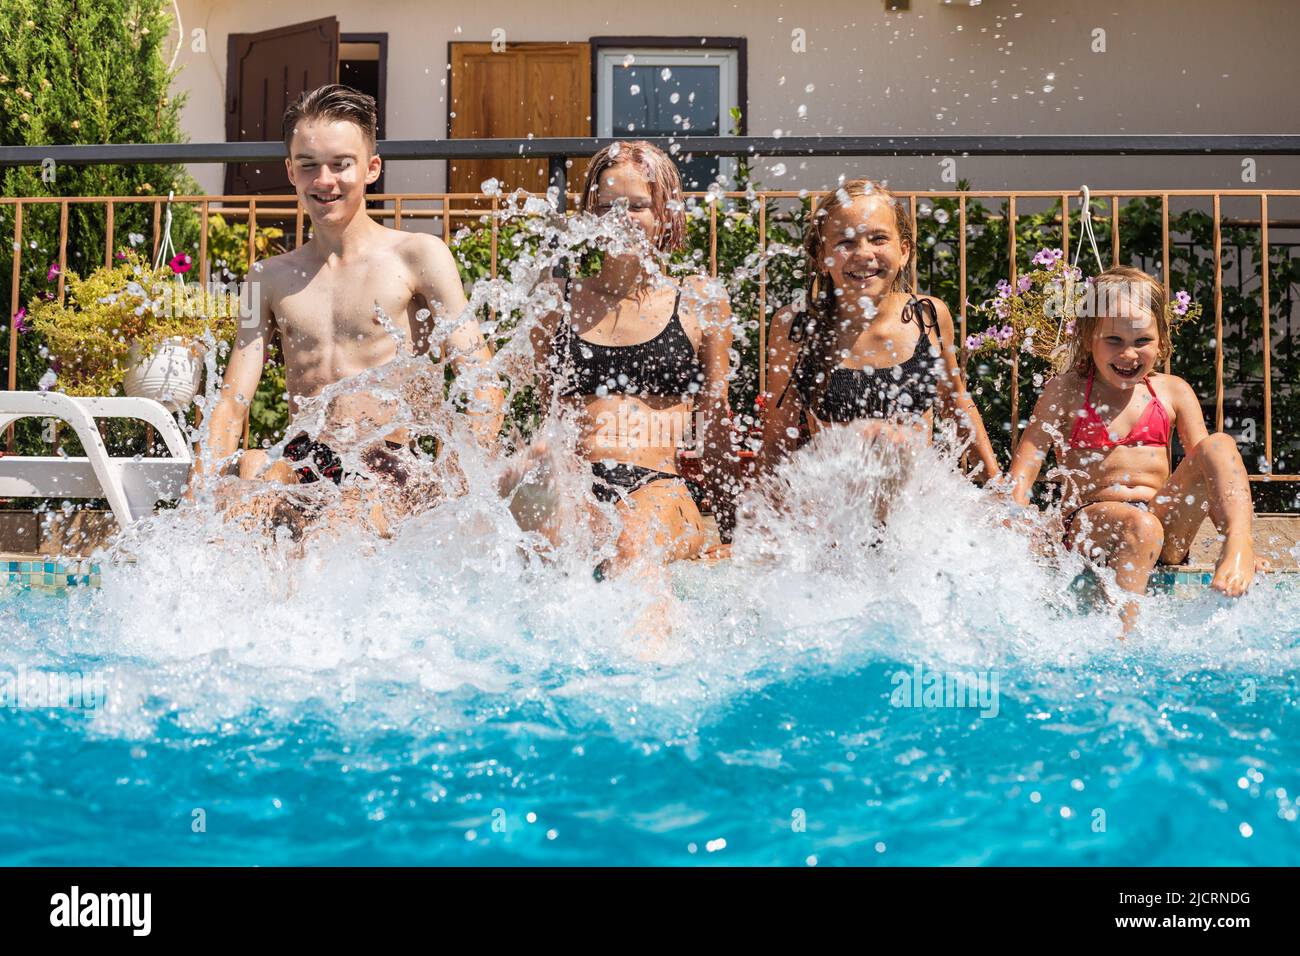 Four happy children having fun in a hotel pool splashing water enjoying summer holidays Stock Photo